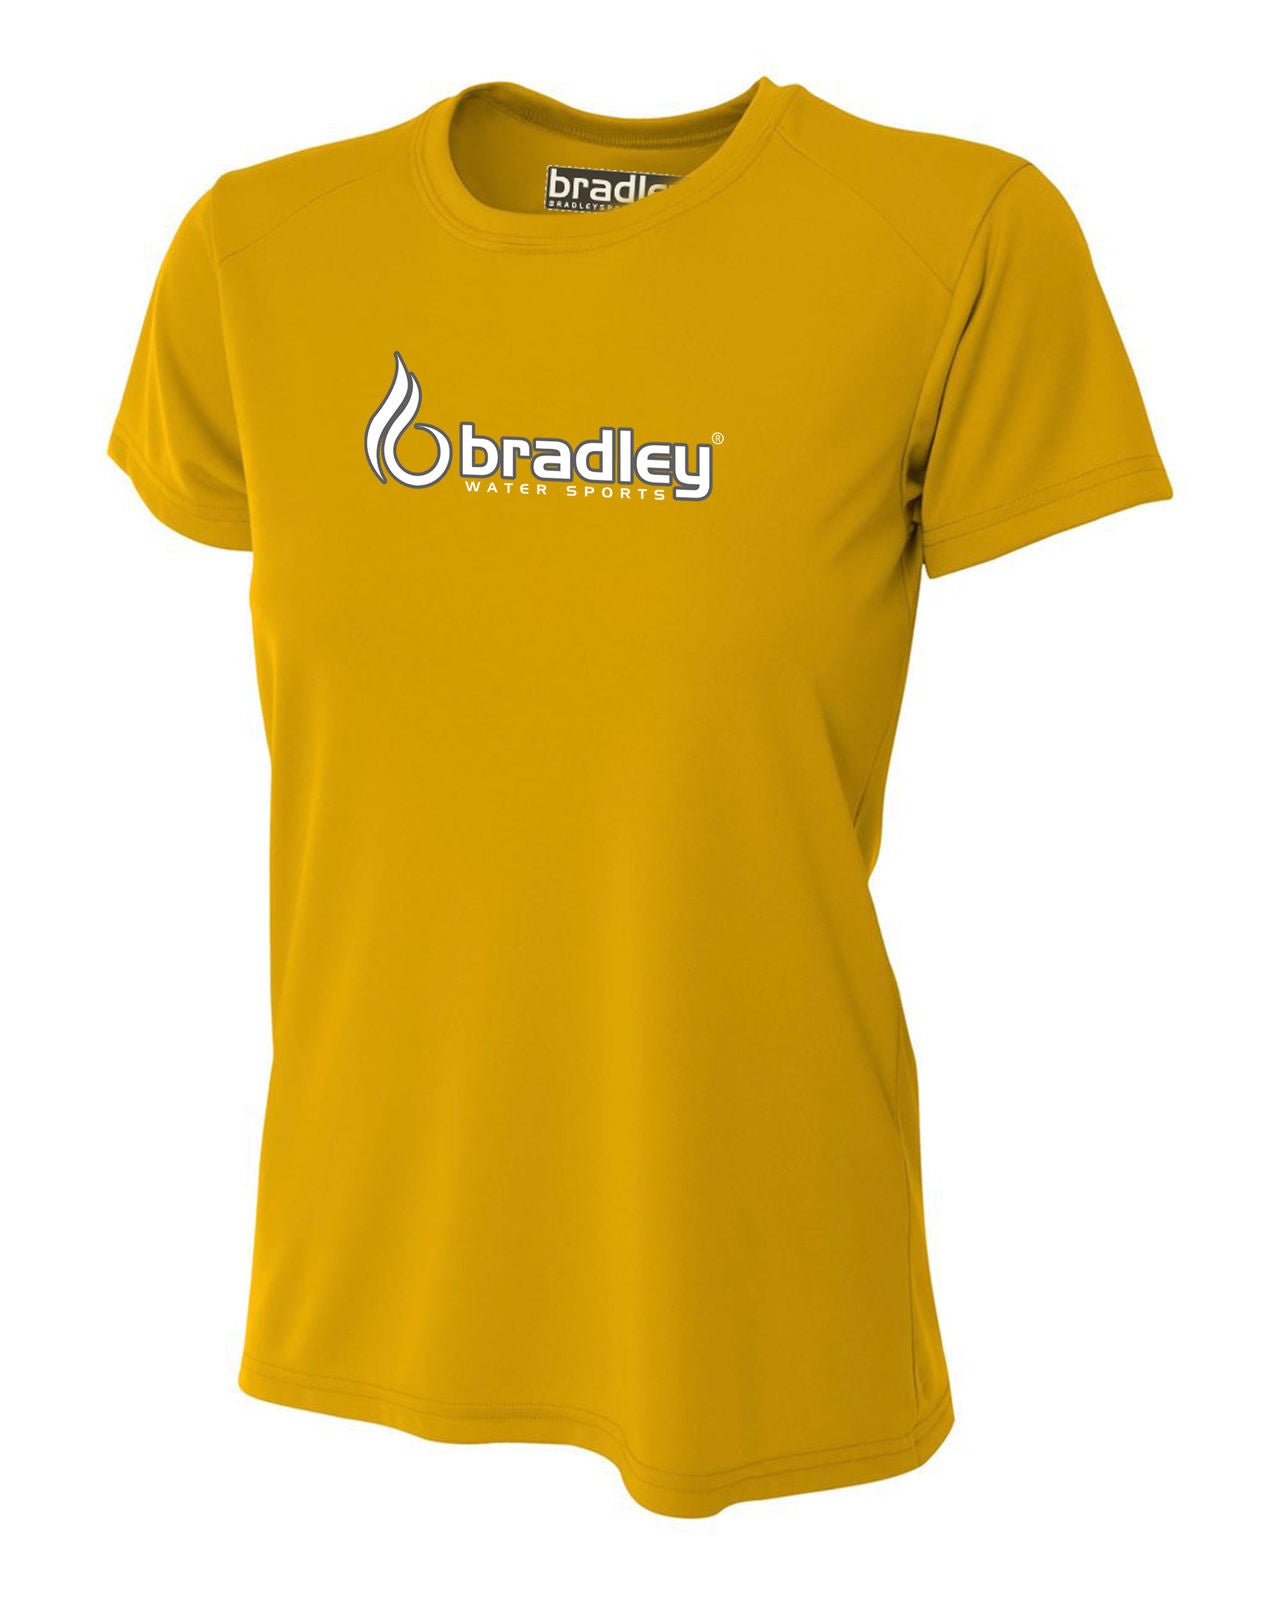 Bradley Rash Guard Women's Surf Swim Wear Shirt Ladies SPF Protective Clothing